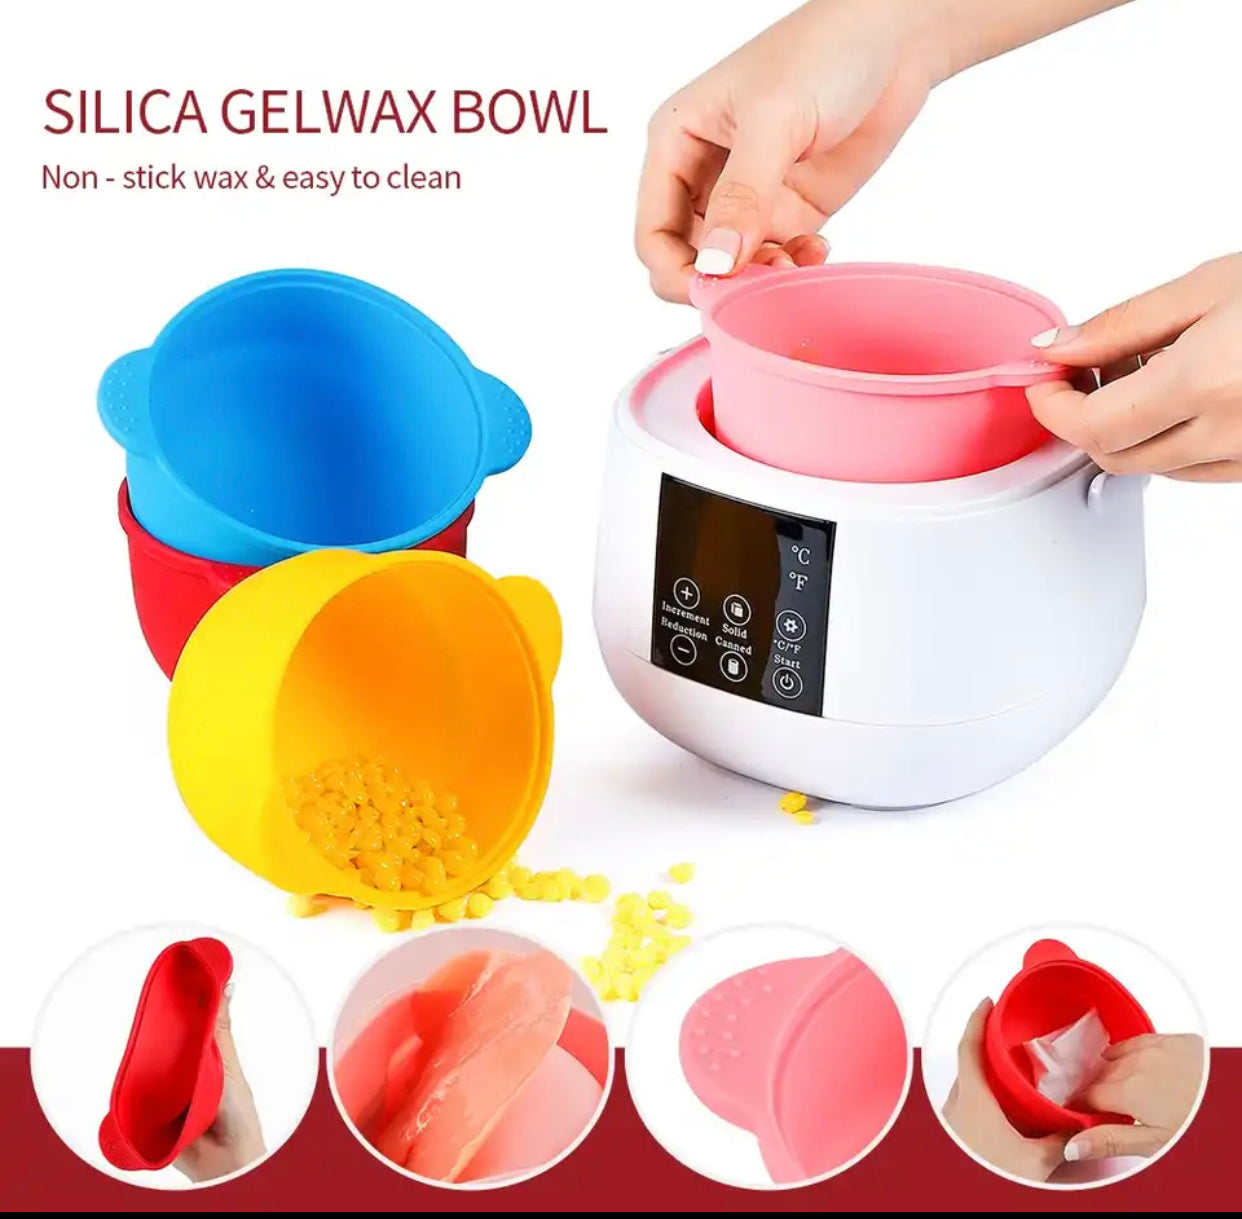 Wax silicone bowl